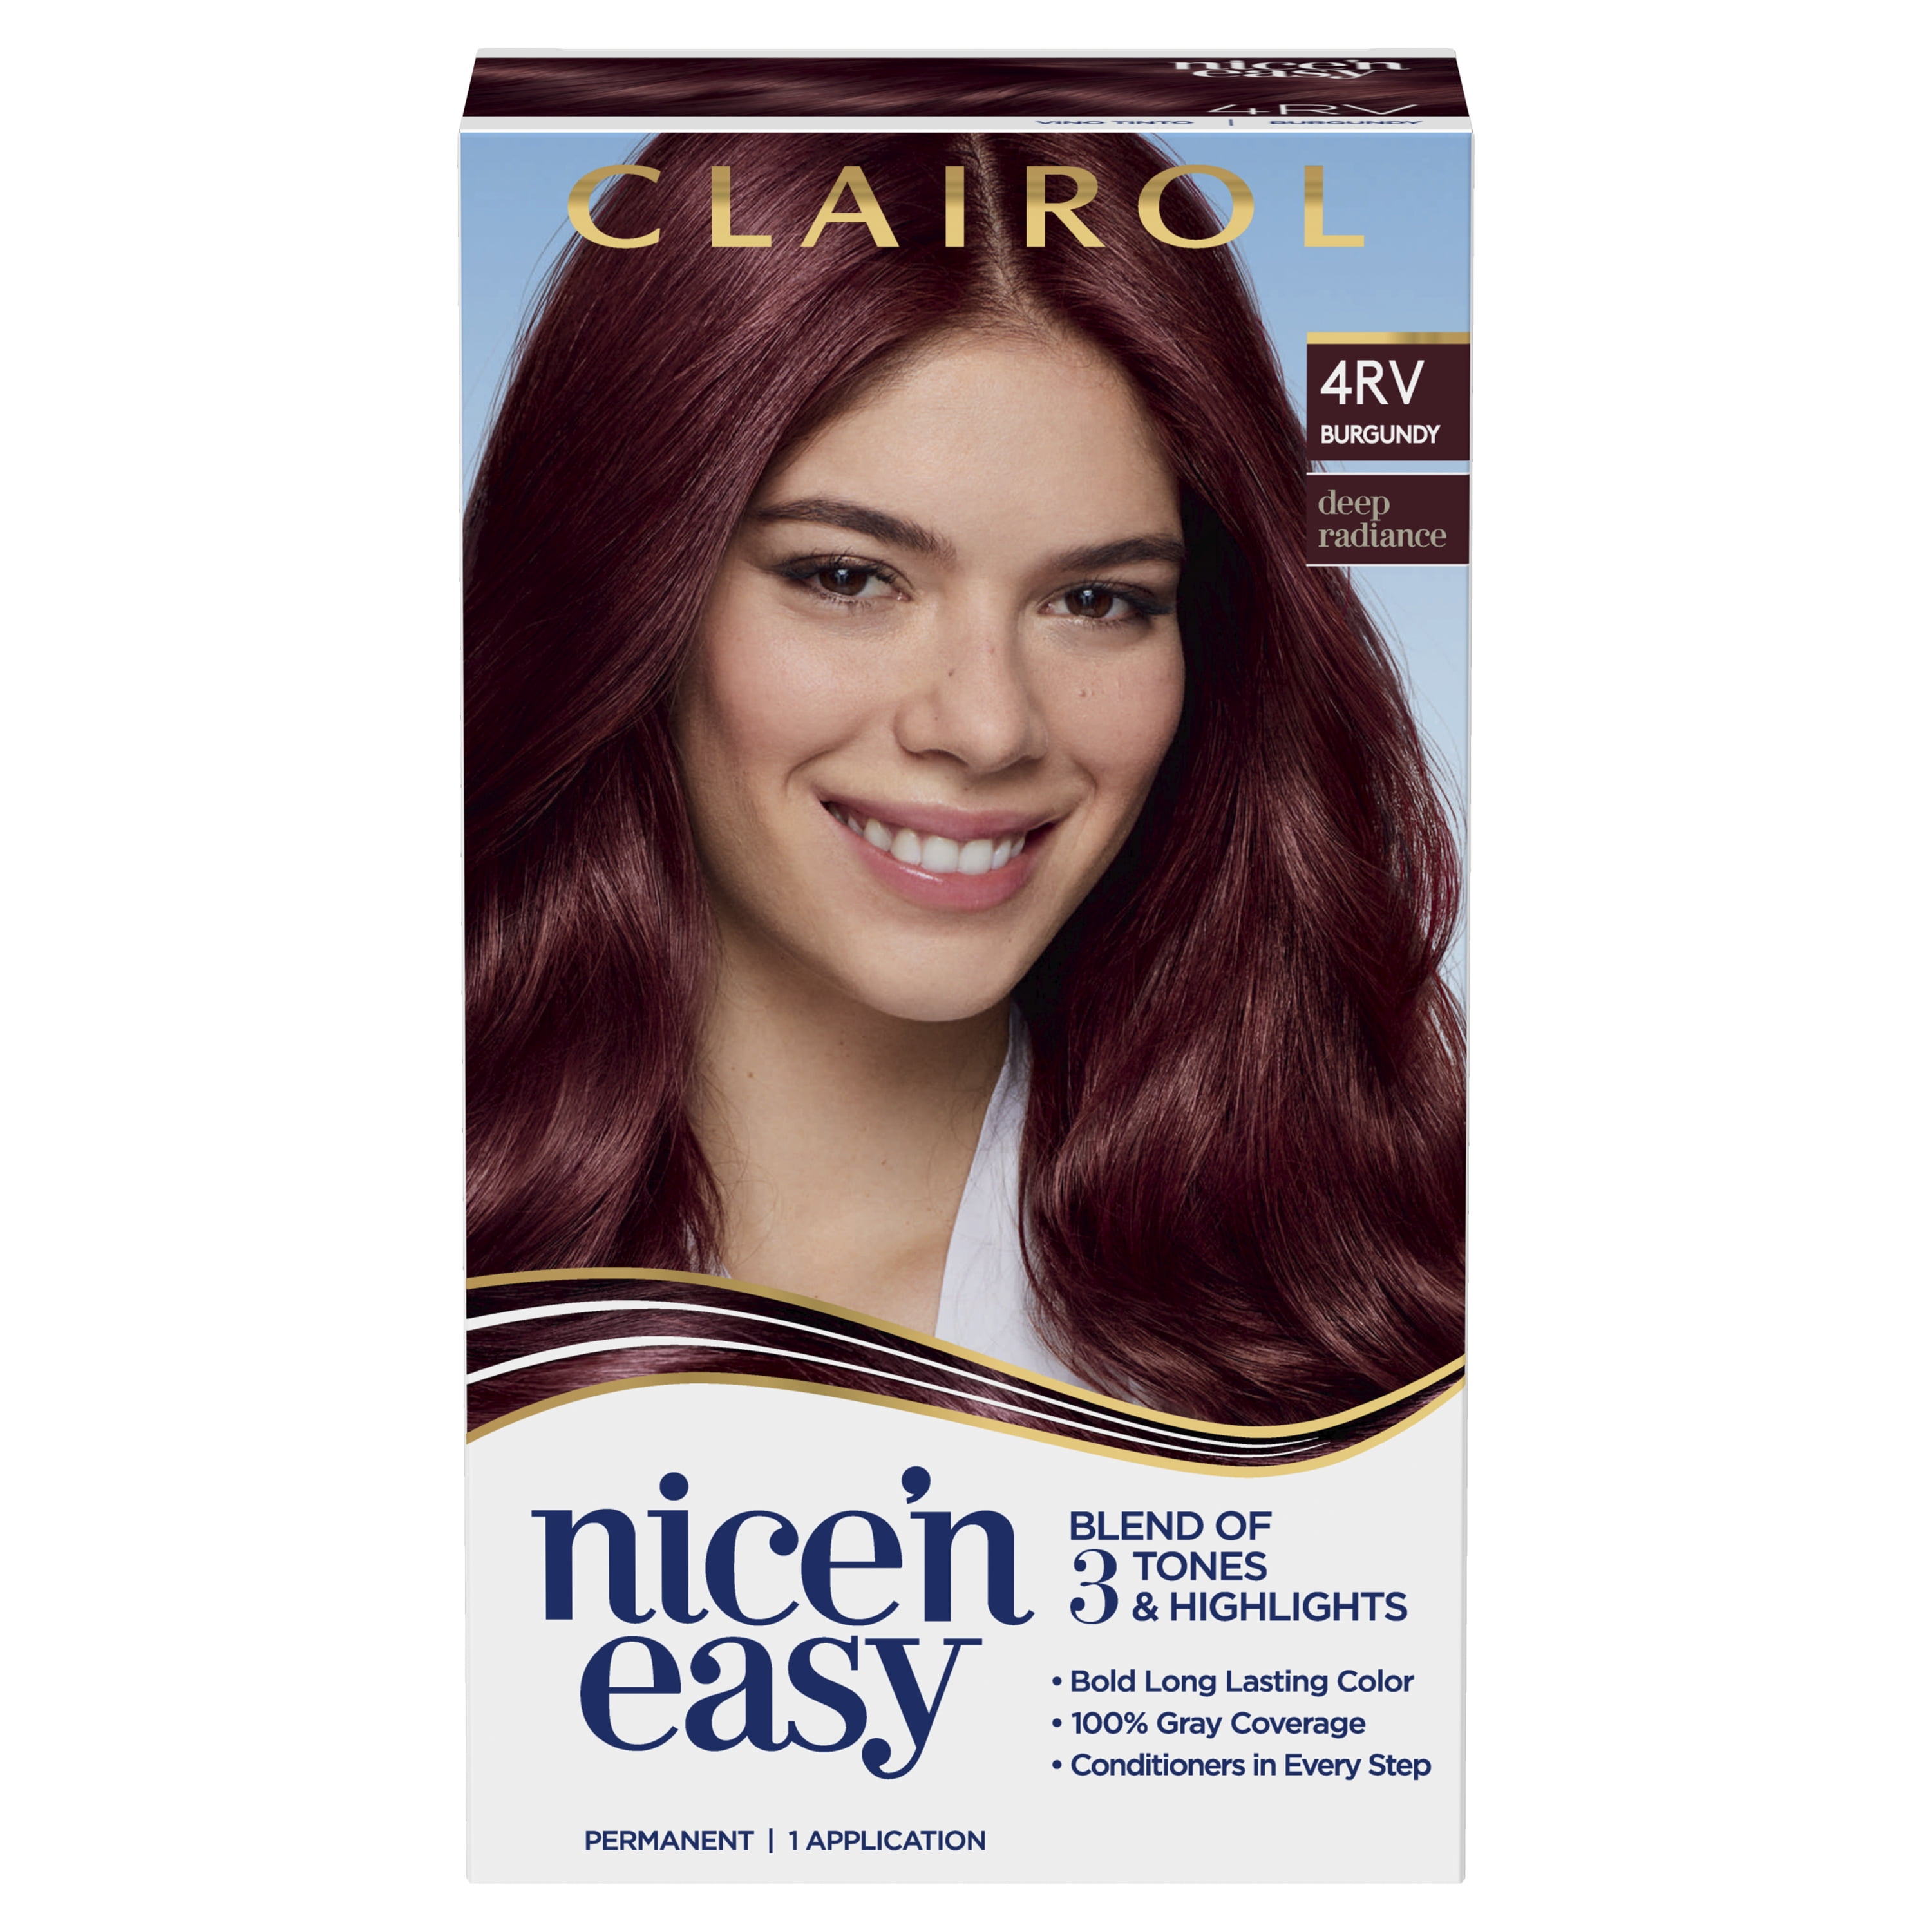 Clairol Nice'n Easy Permanent Hair Color Creme, 4RV Burgundy, Hair Dye, 1  Application 